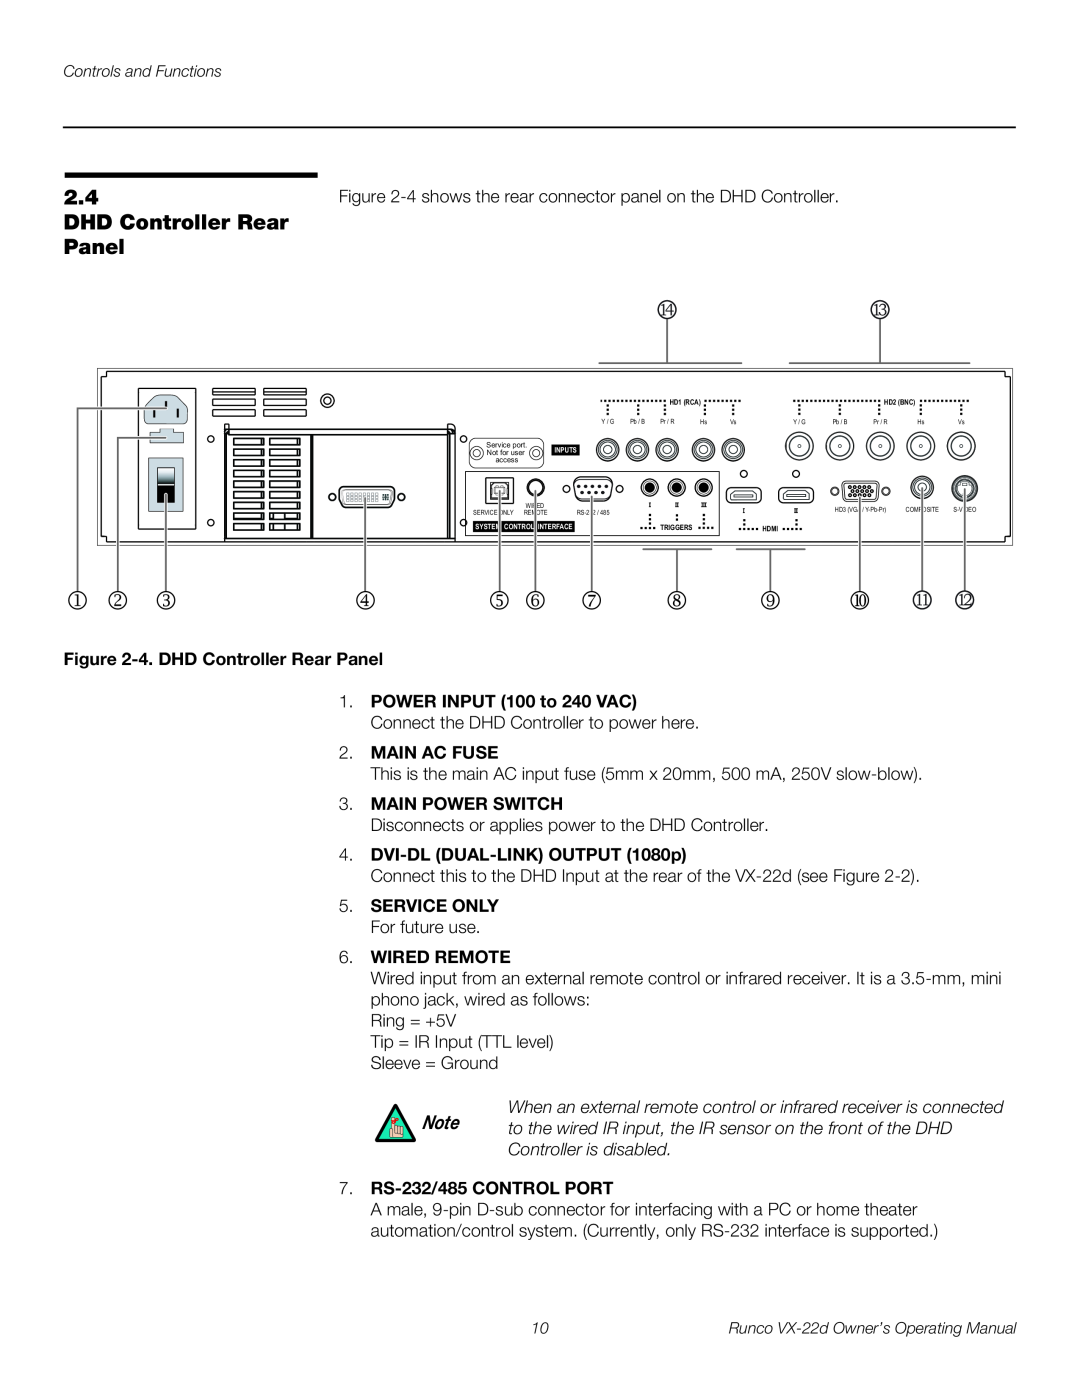 Runco VX-22D manual 4. DHD Controller Rear Panel, Main Ac Fuse, Main Power Switch, DVI-DL DUAL-LINK OUTPUT 1080p, 5 6 7 